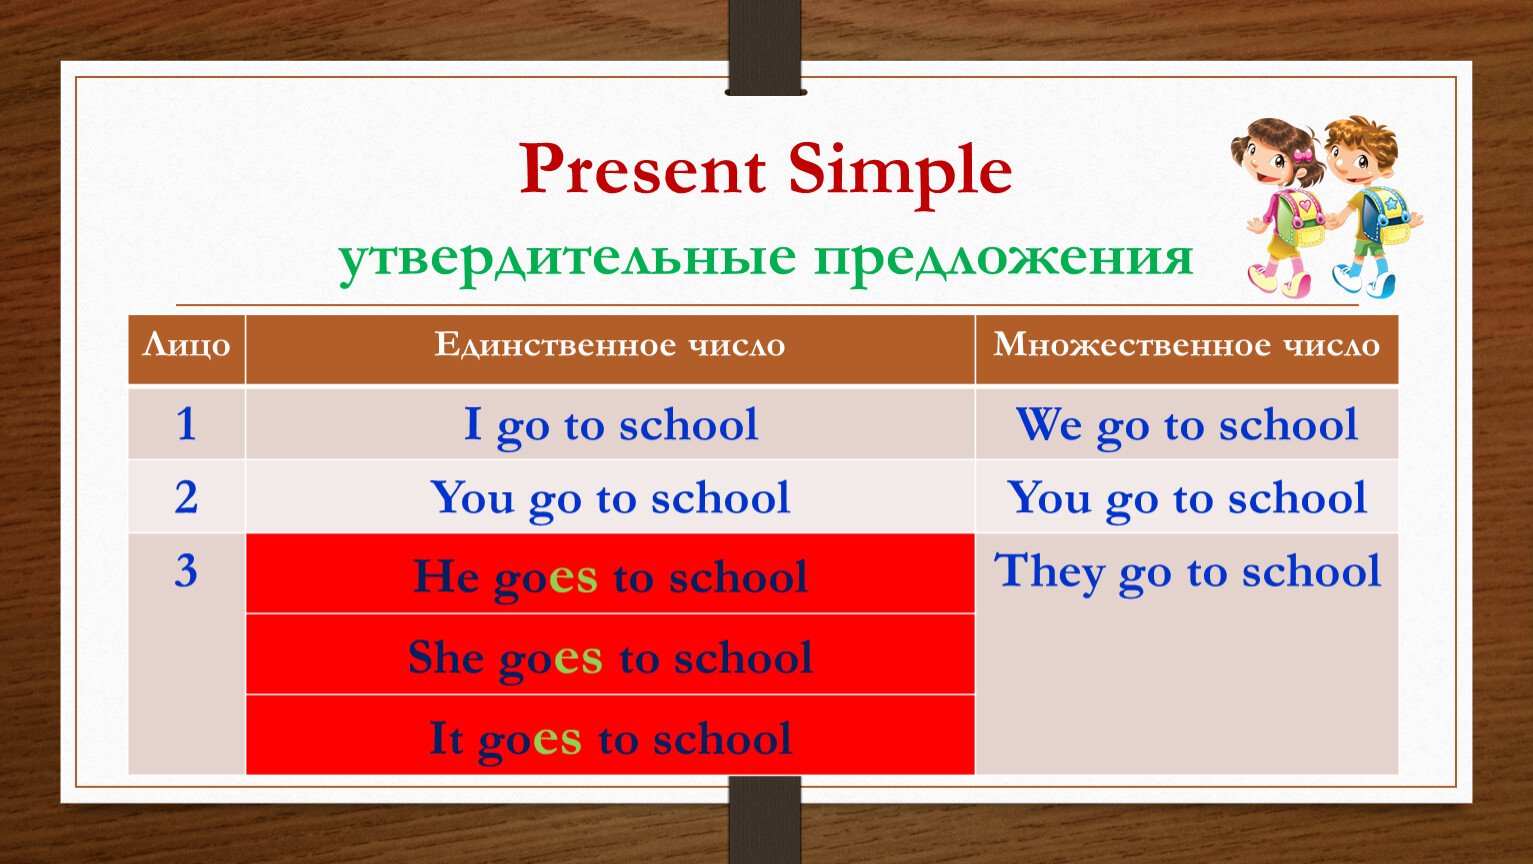 Present simple 8 класс. Презент Симпл. Present simple в английском языке. Present simple утвердительные. Презент Симпл утвердительные предложения.